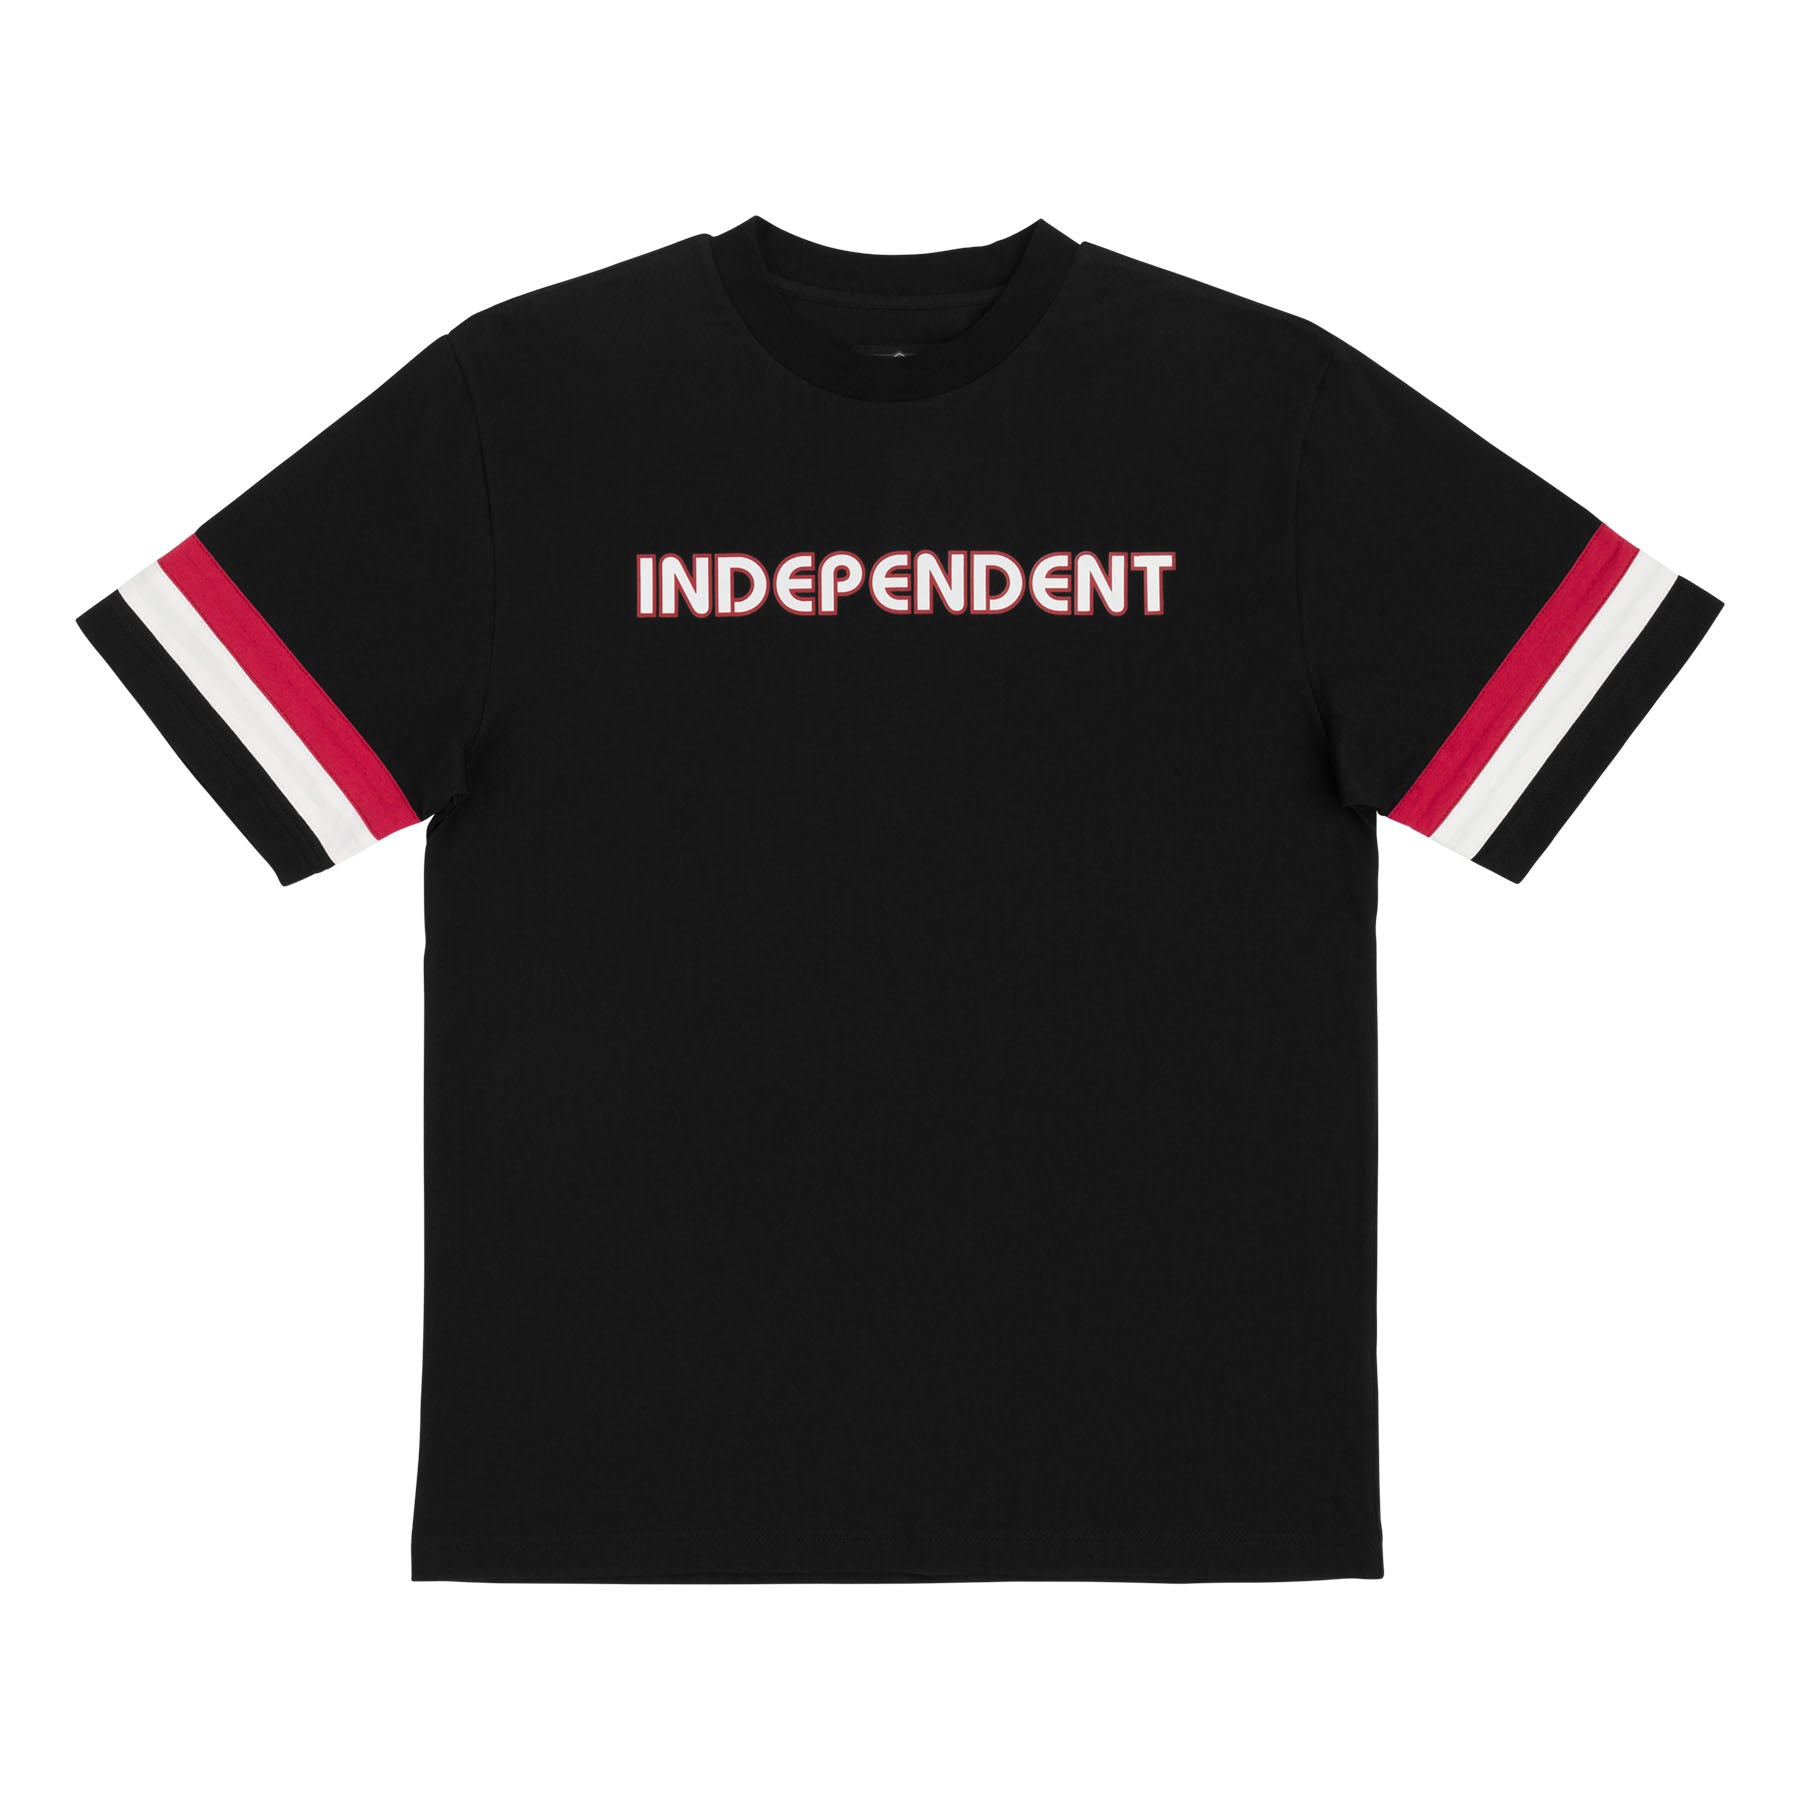 Independent Bauhaus S/S Cotton Jersey Black